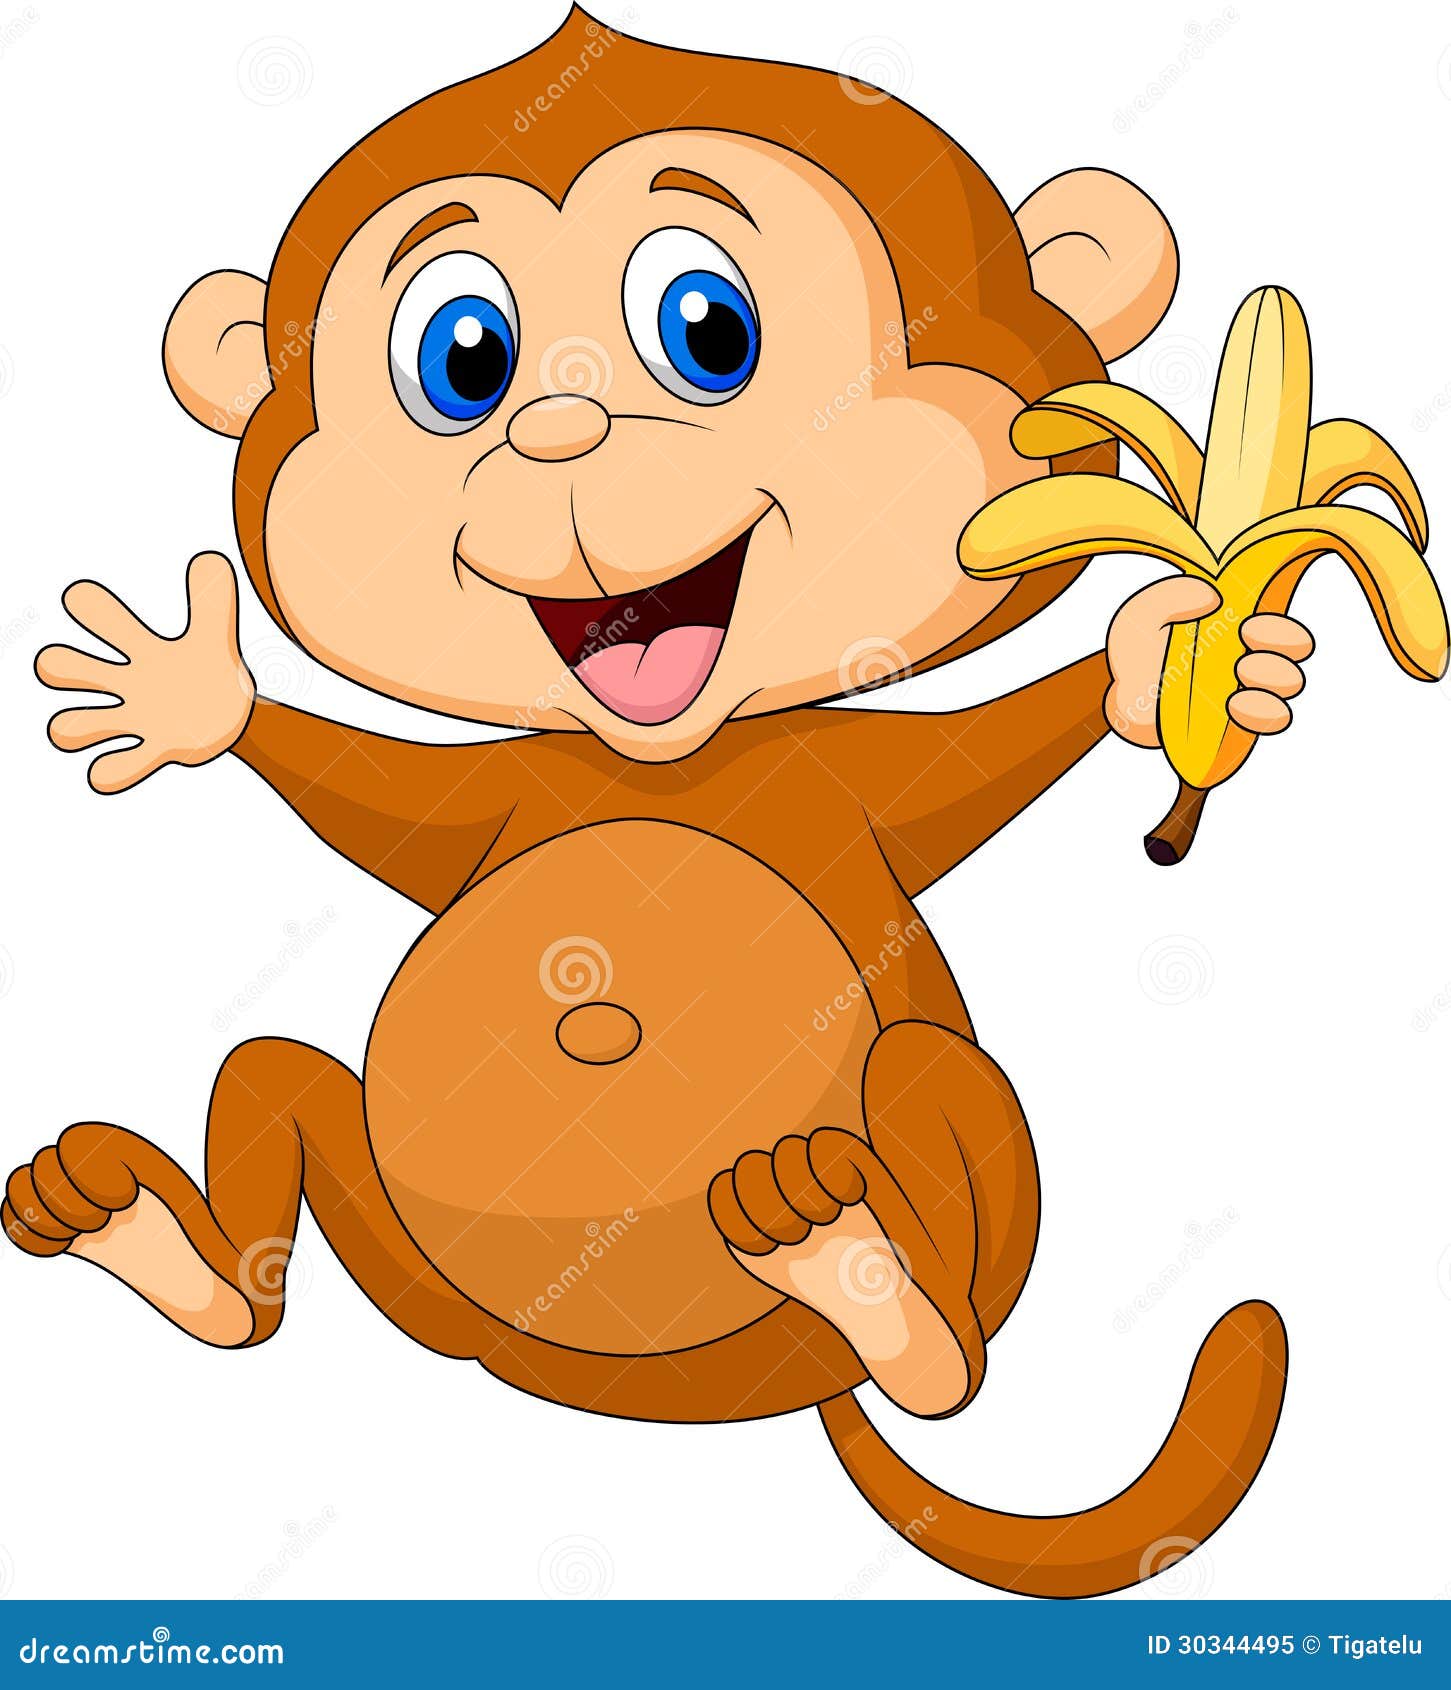 monkey illustrations clipart - photo #38